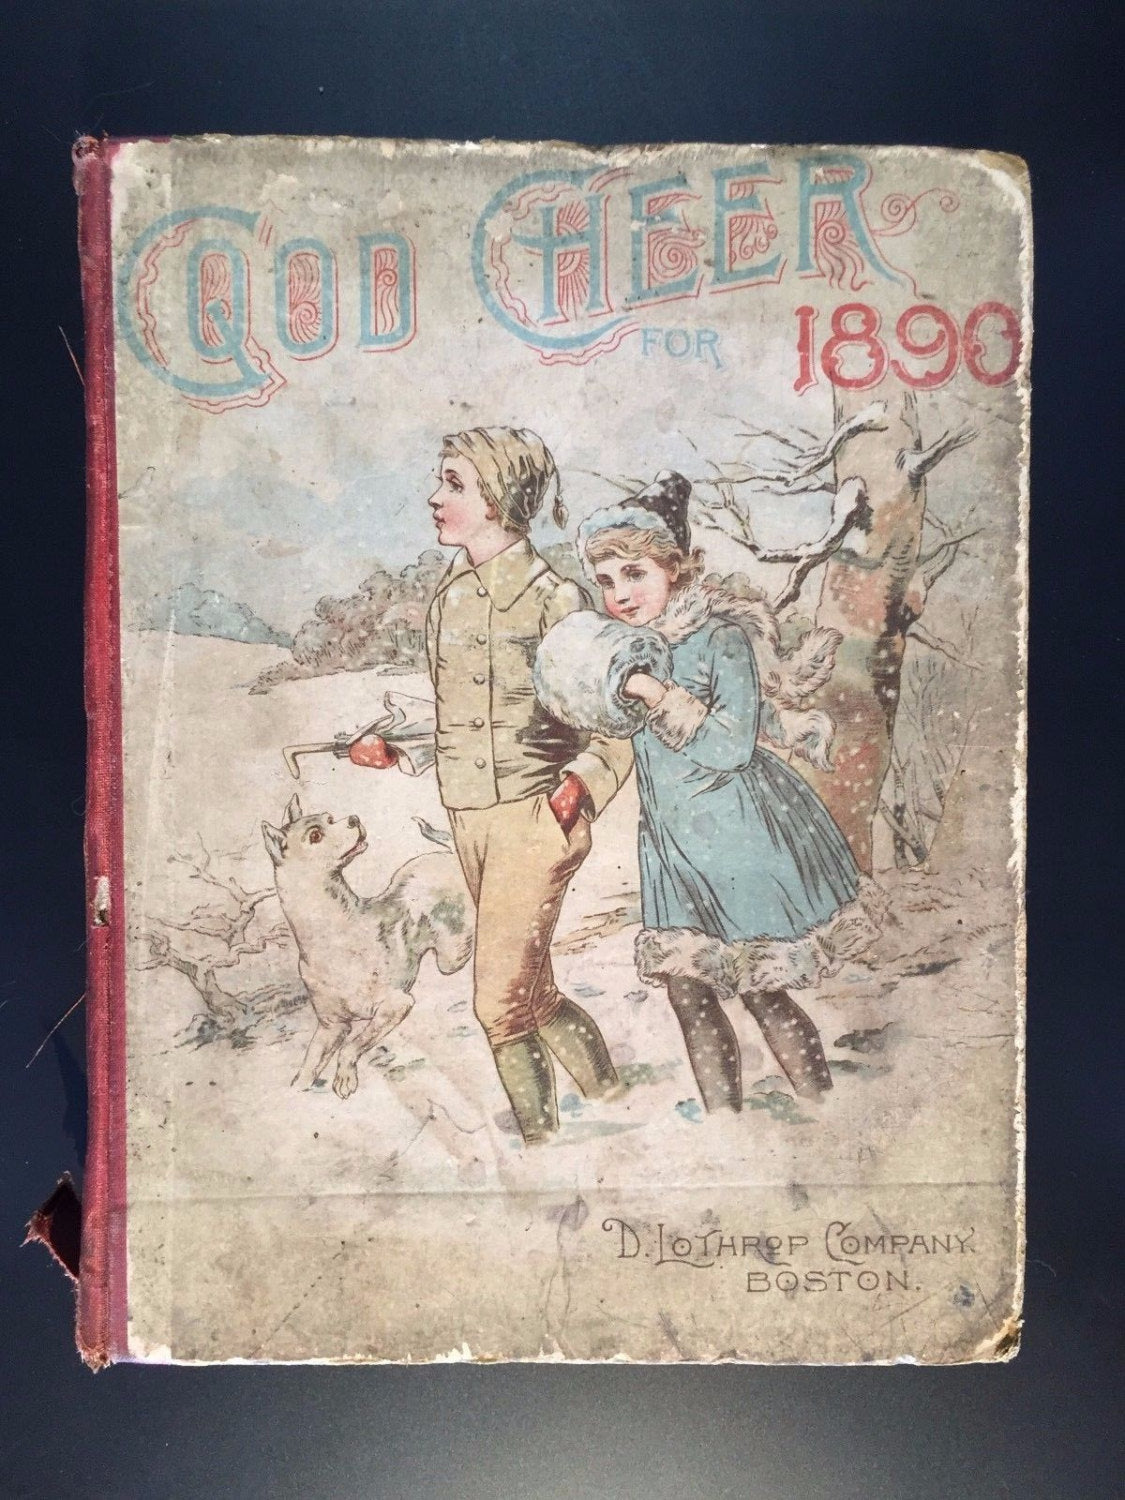 Good Cheer for 1890, Vintage Victorian Children's Magazine, Illustrated, 1st Ed.